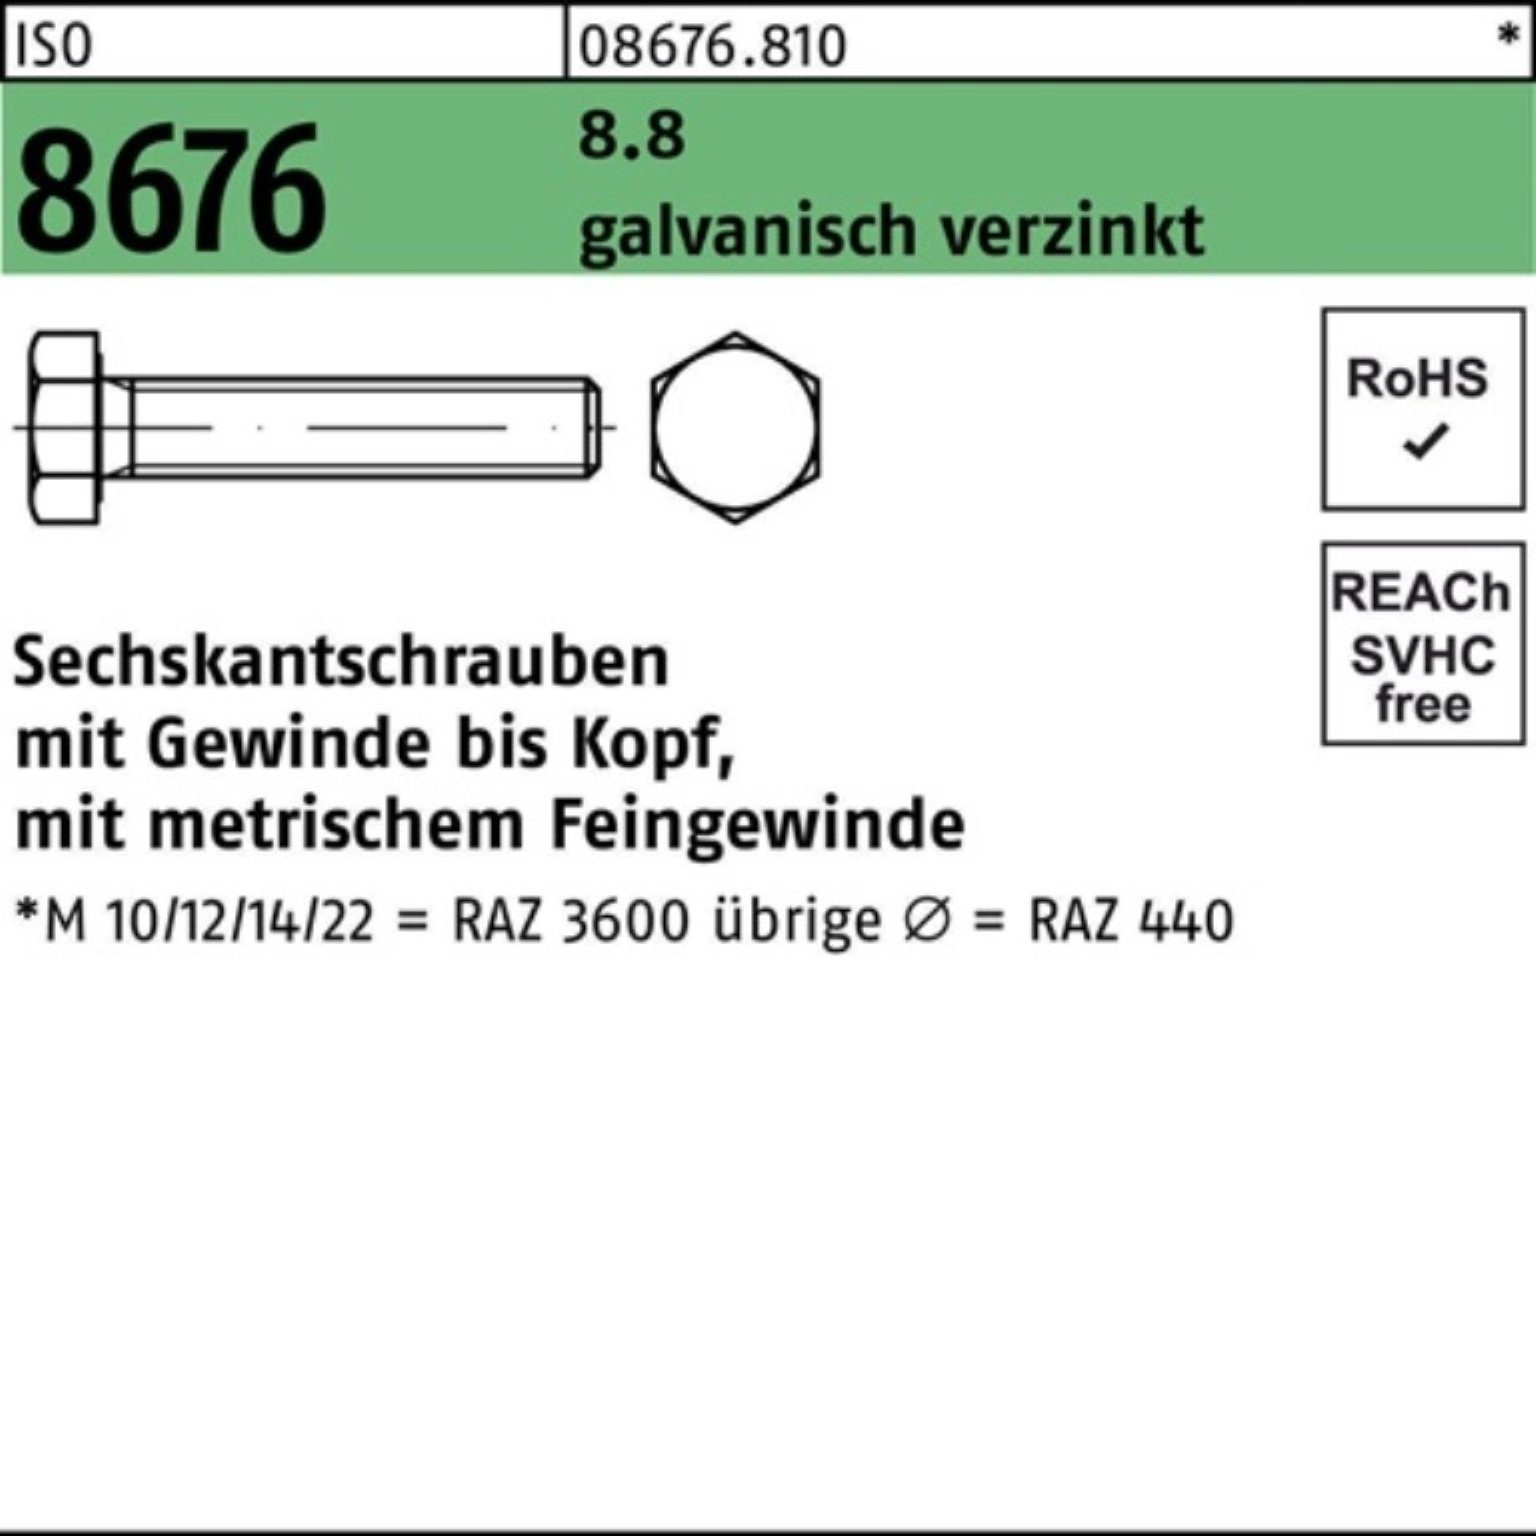 Reyher Sechskantschraube 100er Pack Sechskantschraube 45 VG 8.8 galv.verz. 8676 M20x1,5x ISO 50